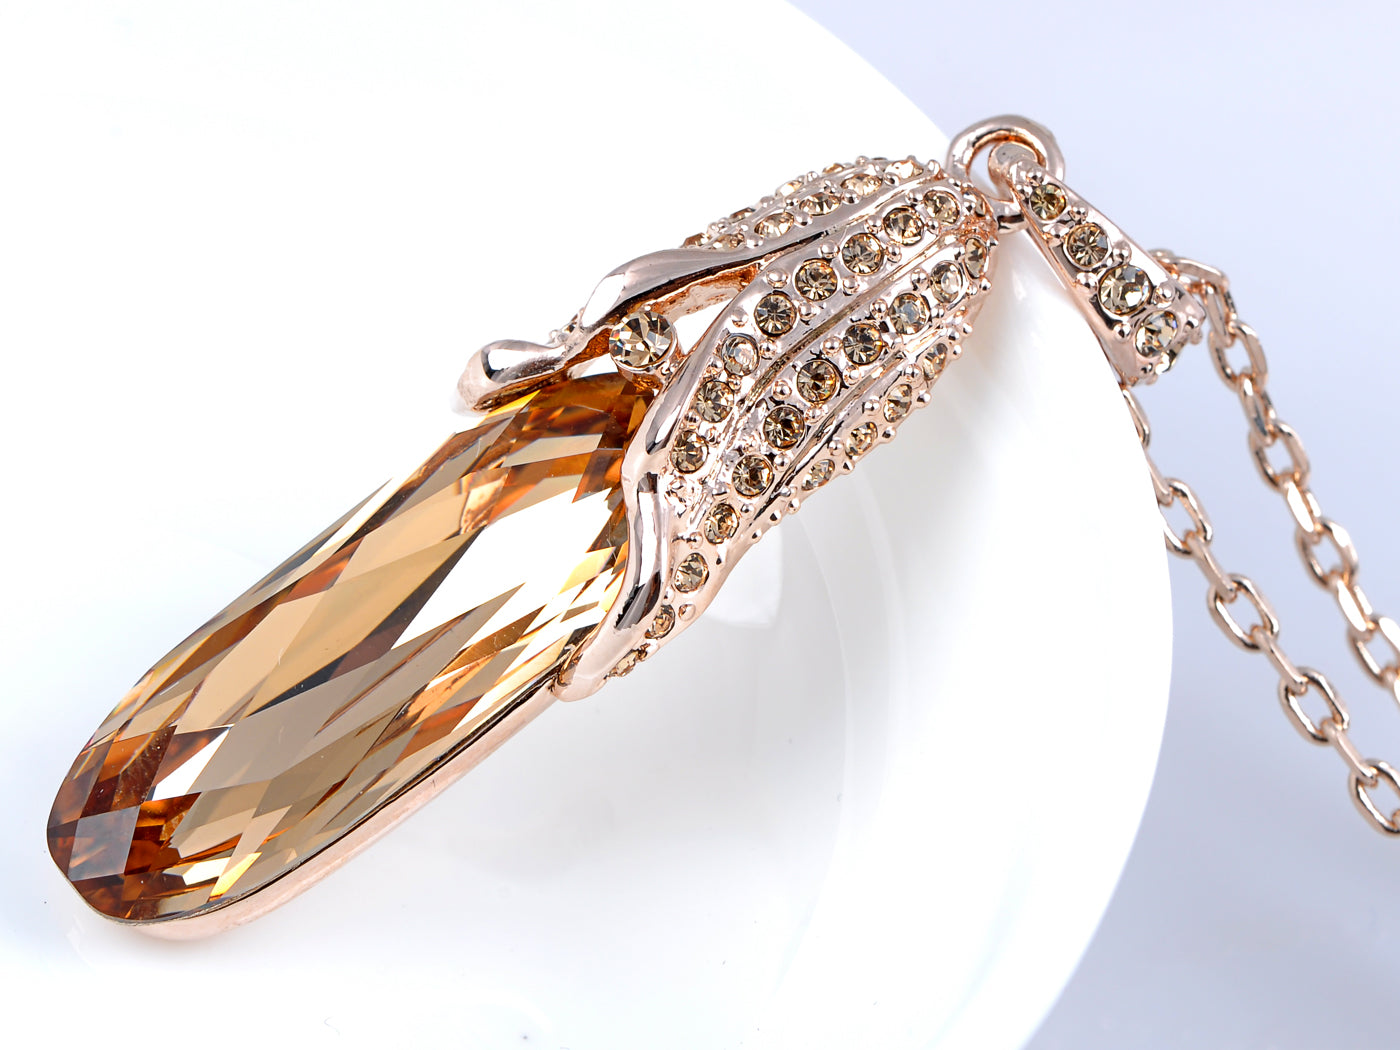 Swarovski Crystal Corn in Cob Peanut Pendant Necklace